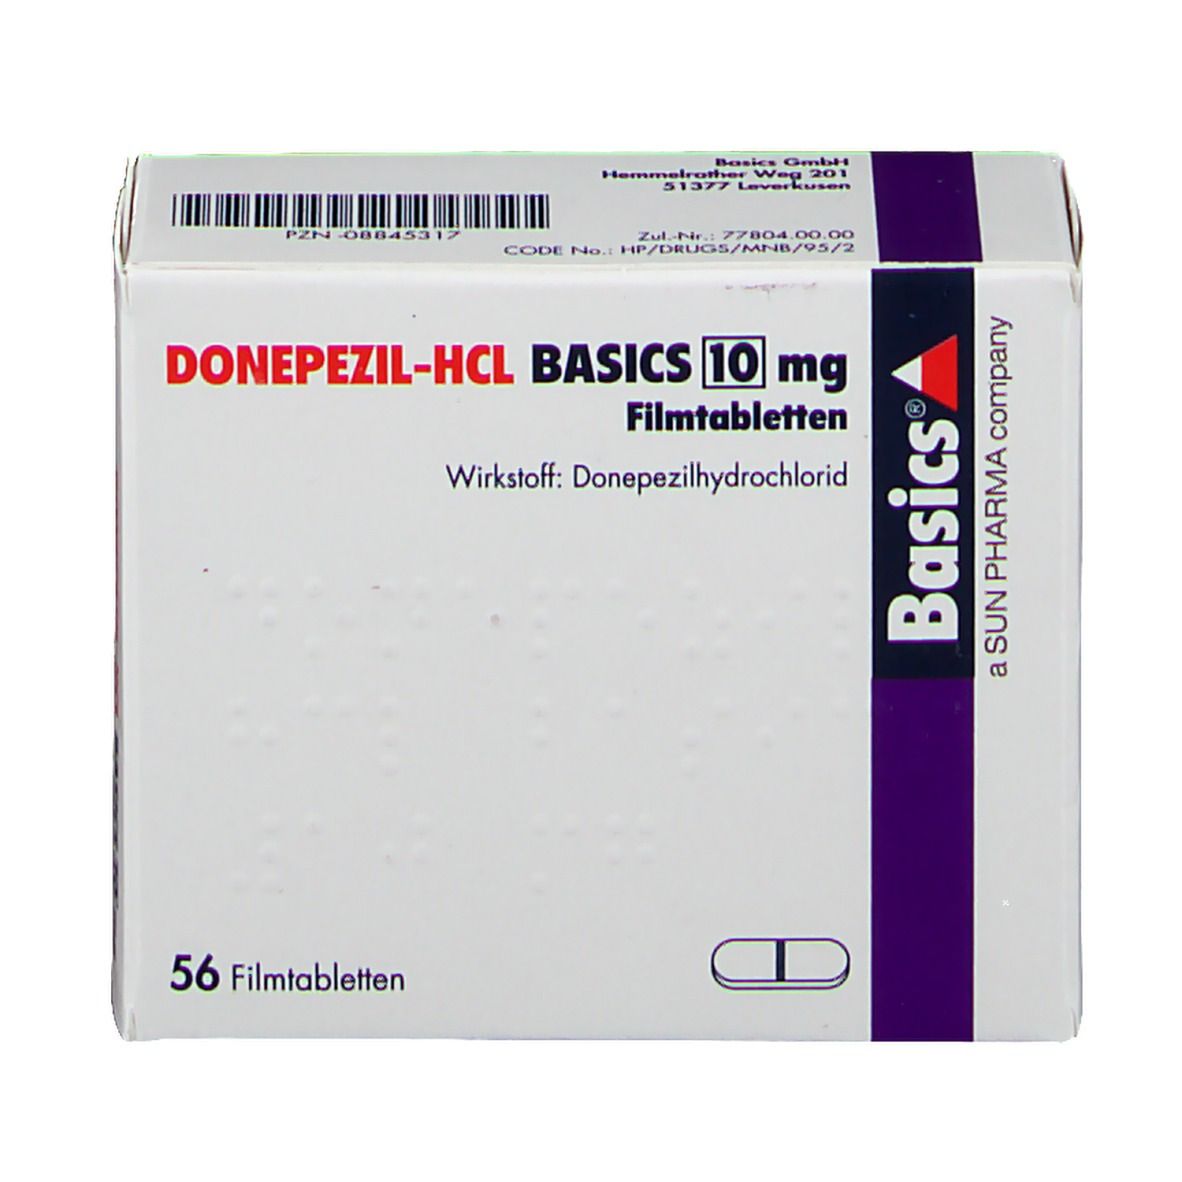 DONEPEZIL-HCL BASICS 10 mg